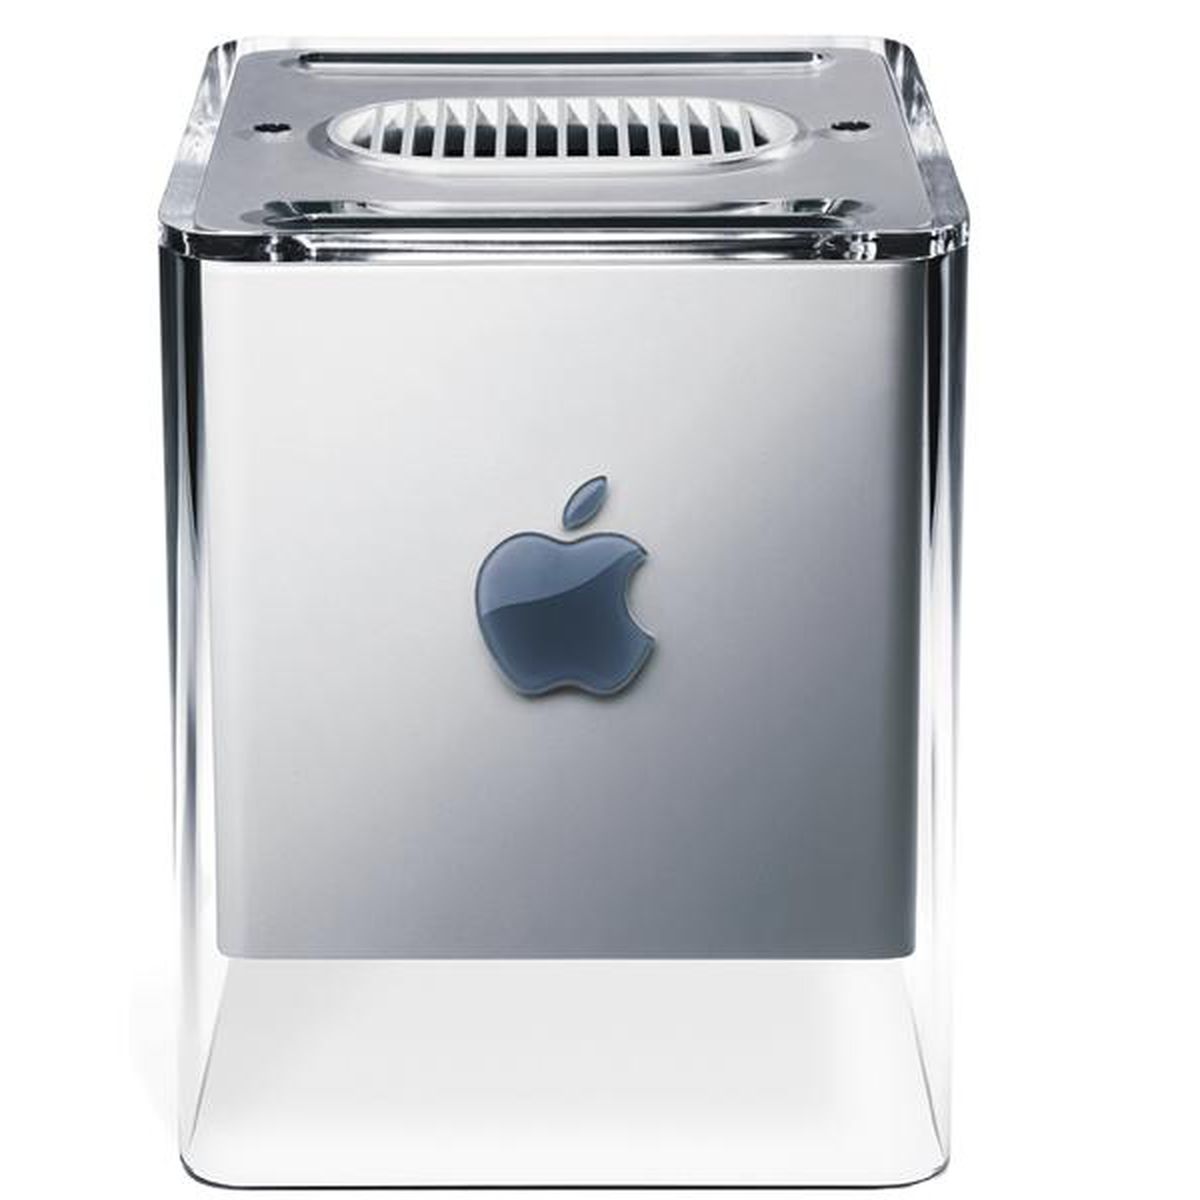 Fan-Favorite Power Mac G4 Cube Design to Return - MacRumors